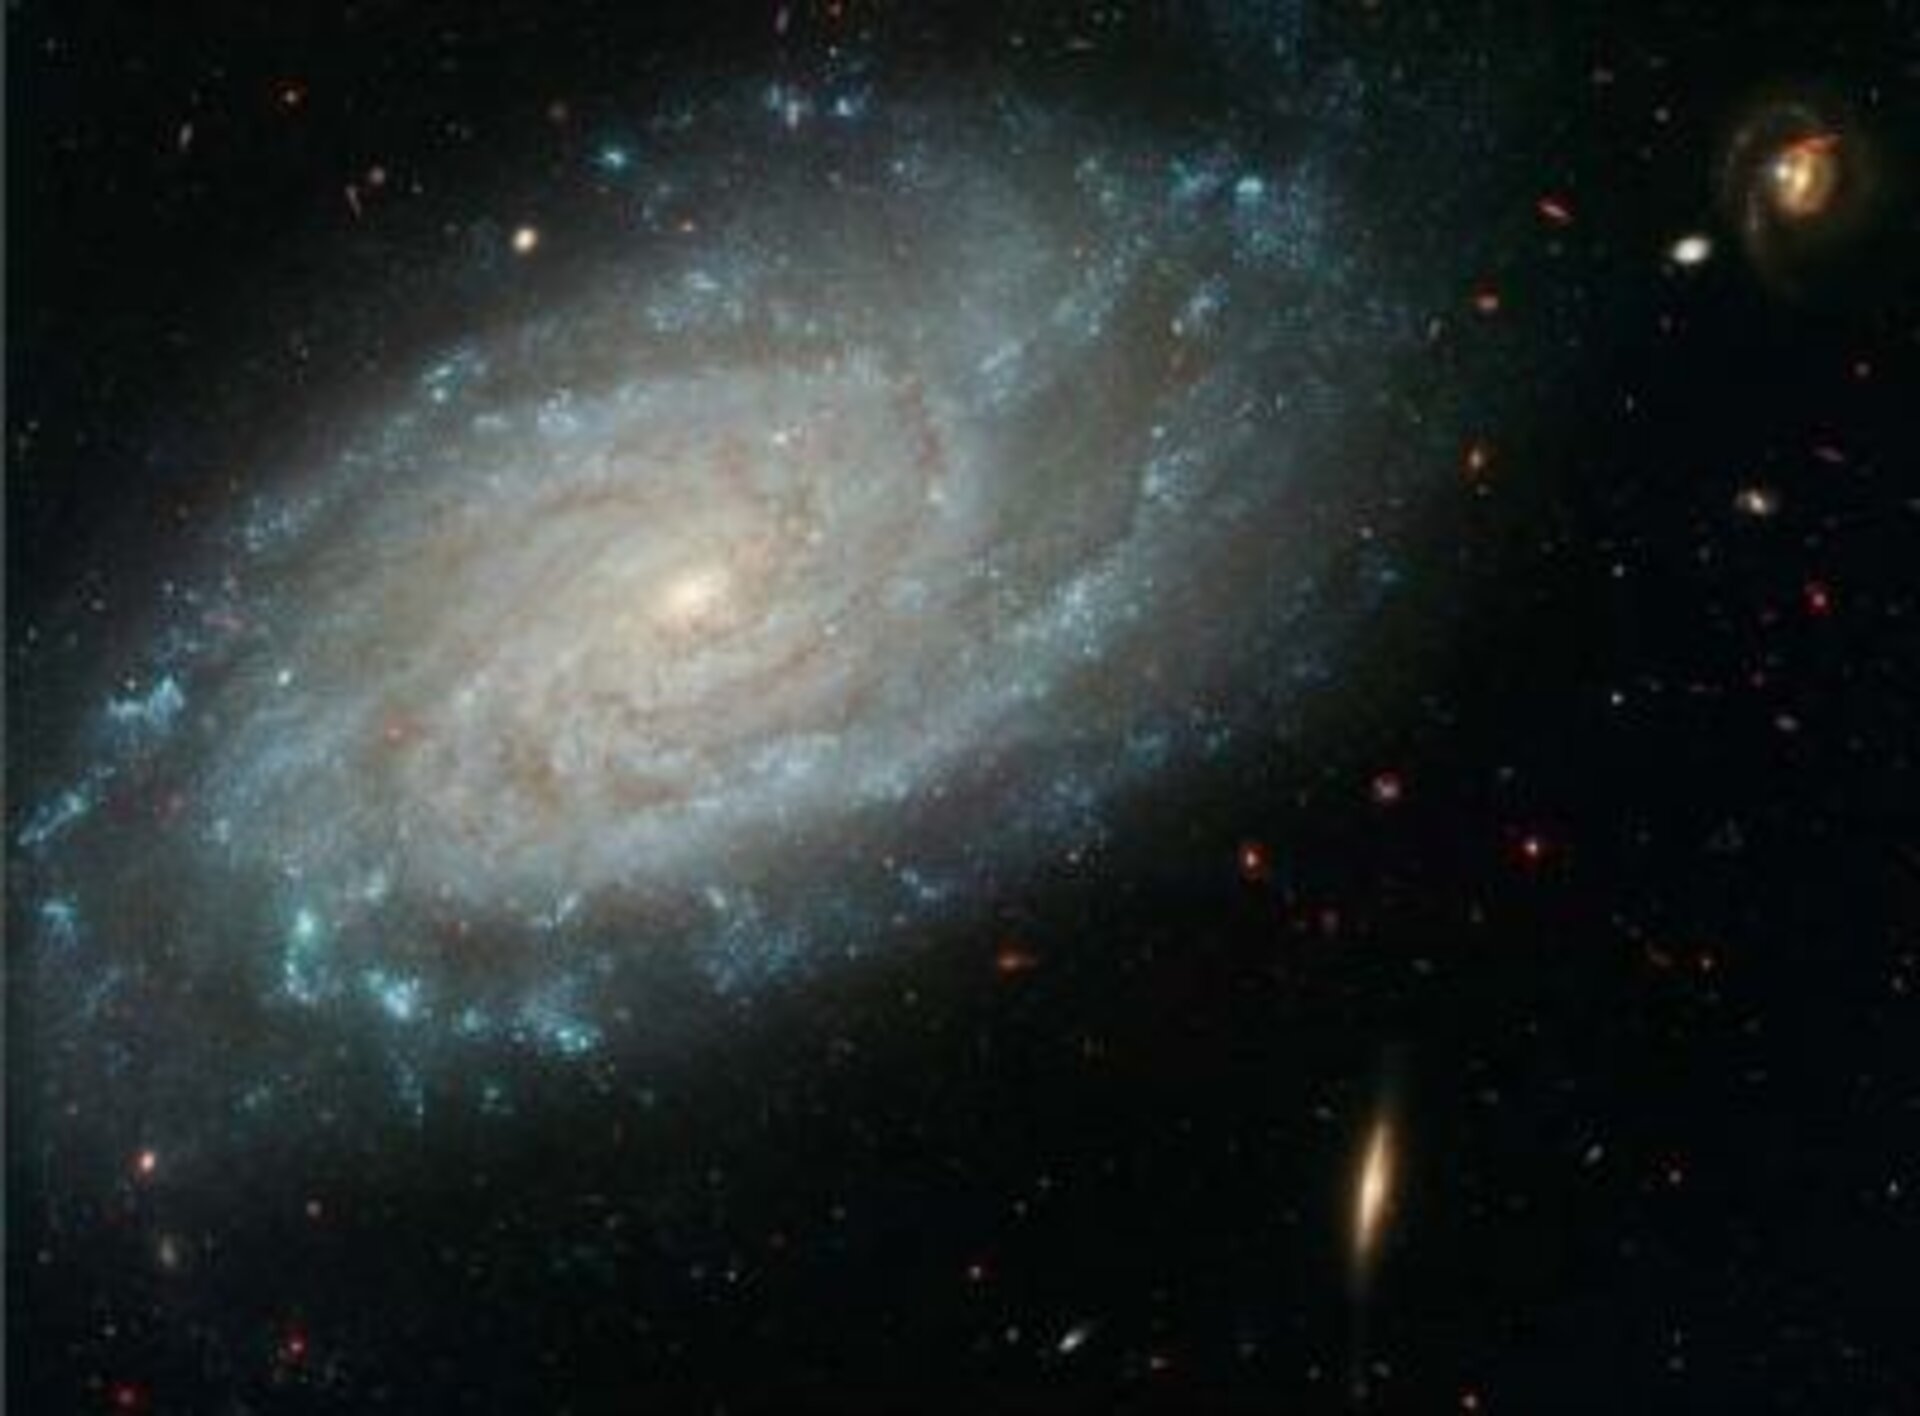 Galaxy NGC 3370